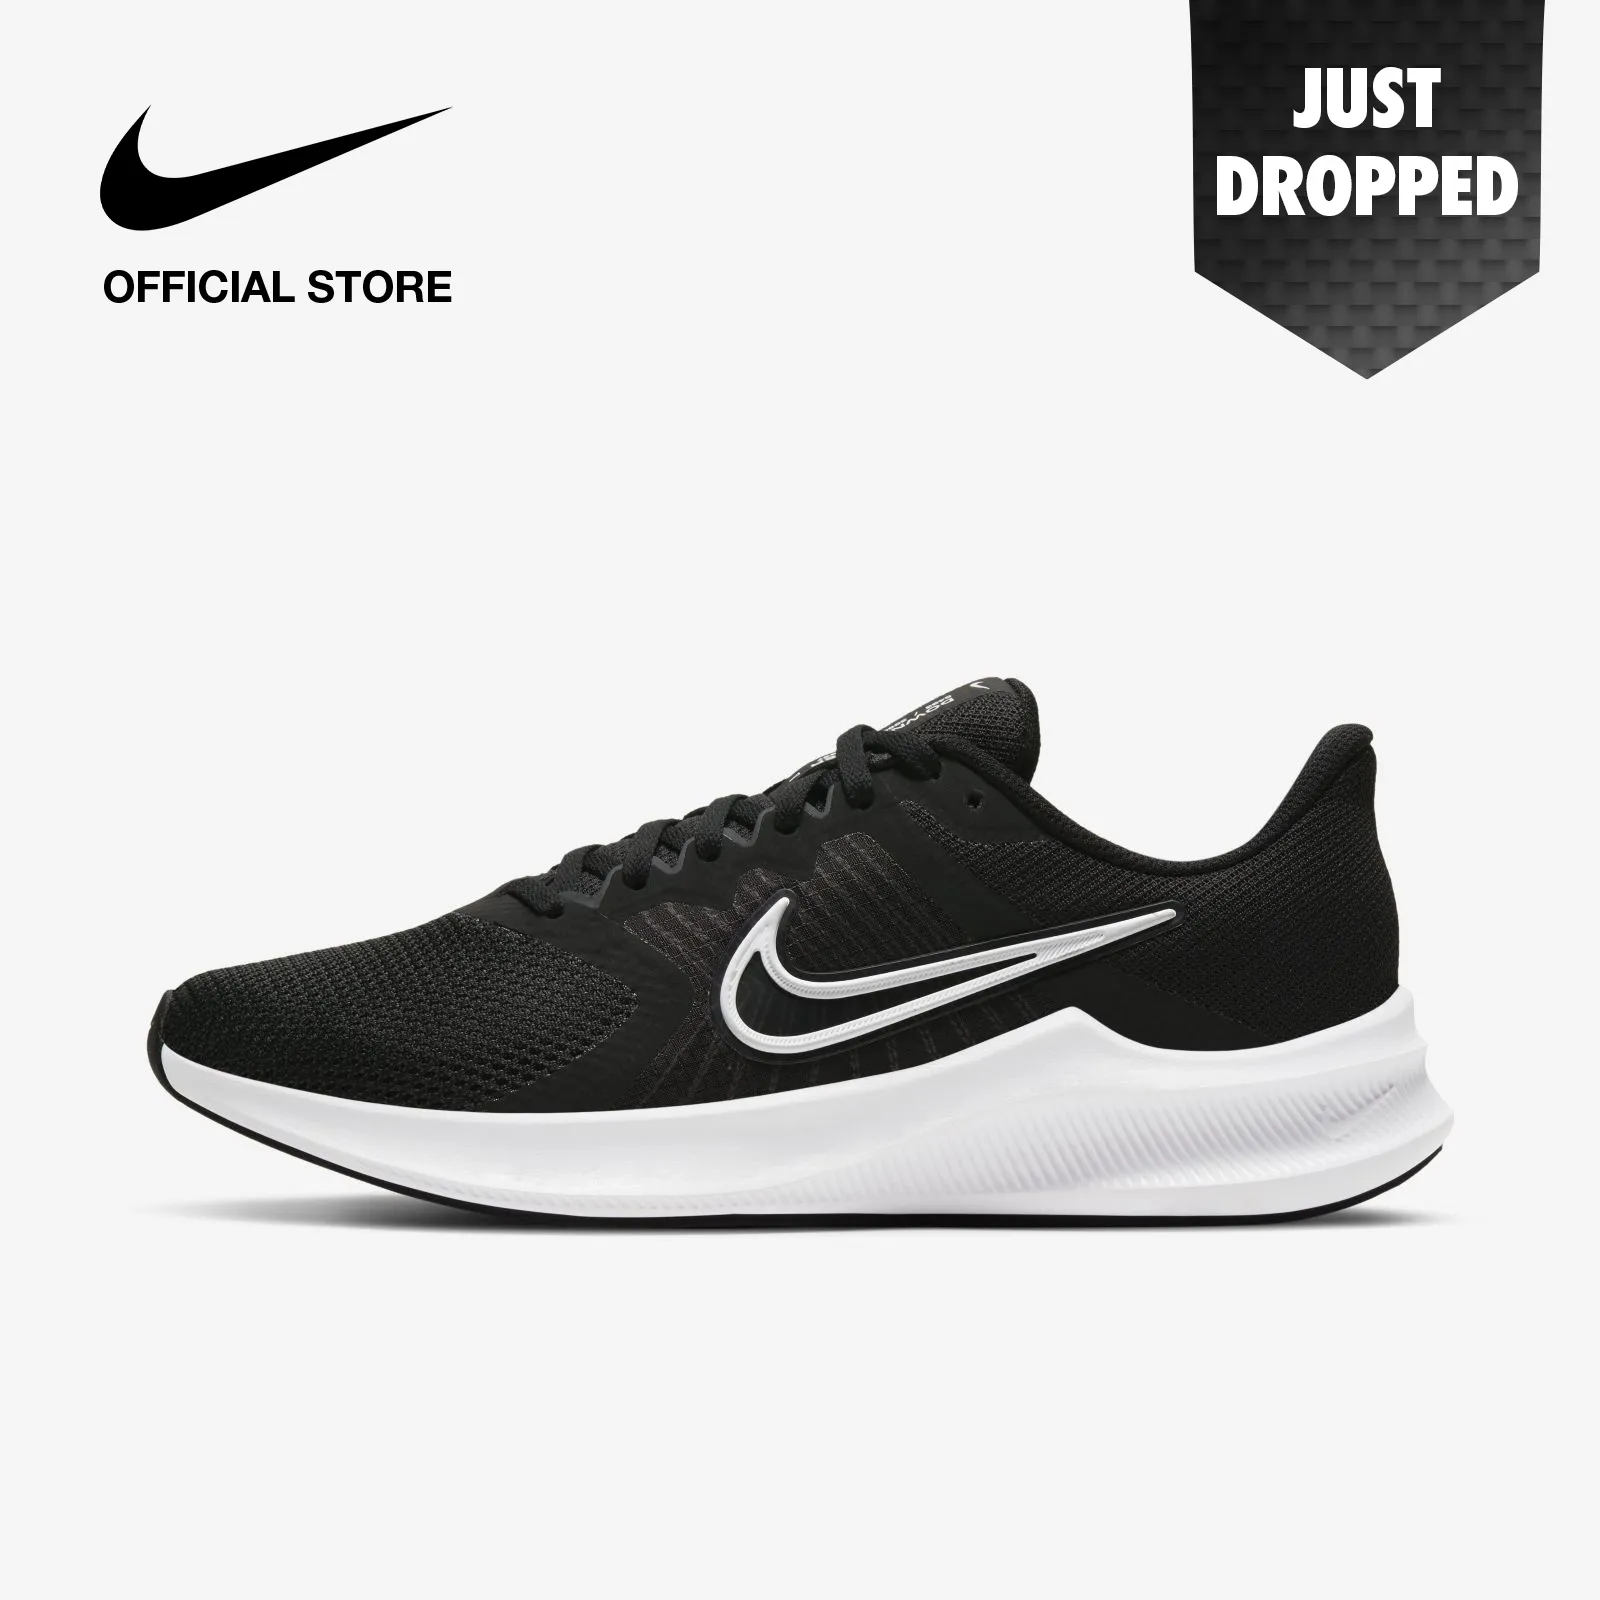 Nike Women's Downshifter 11 Running Shoes - Black ไนกี้ รองเท้าวิ่งผู้หญิง ดาวน์ชิฟเตอร์ 11 - สีดำ